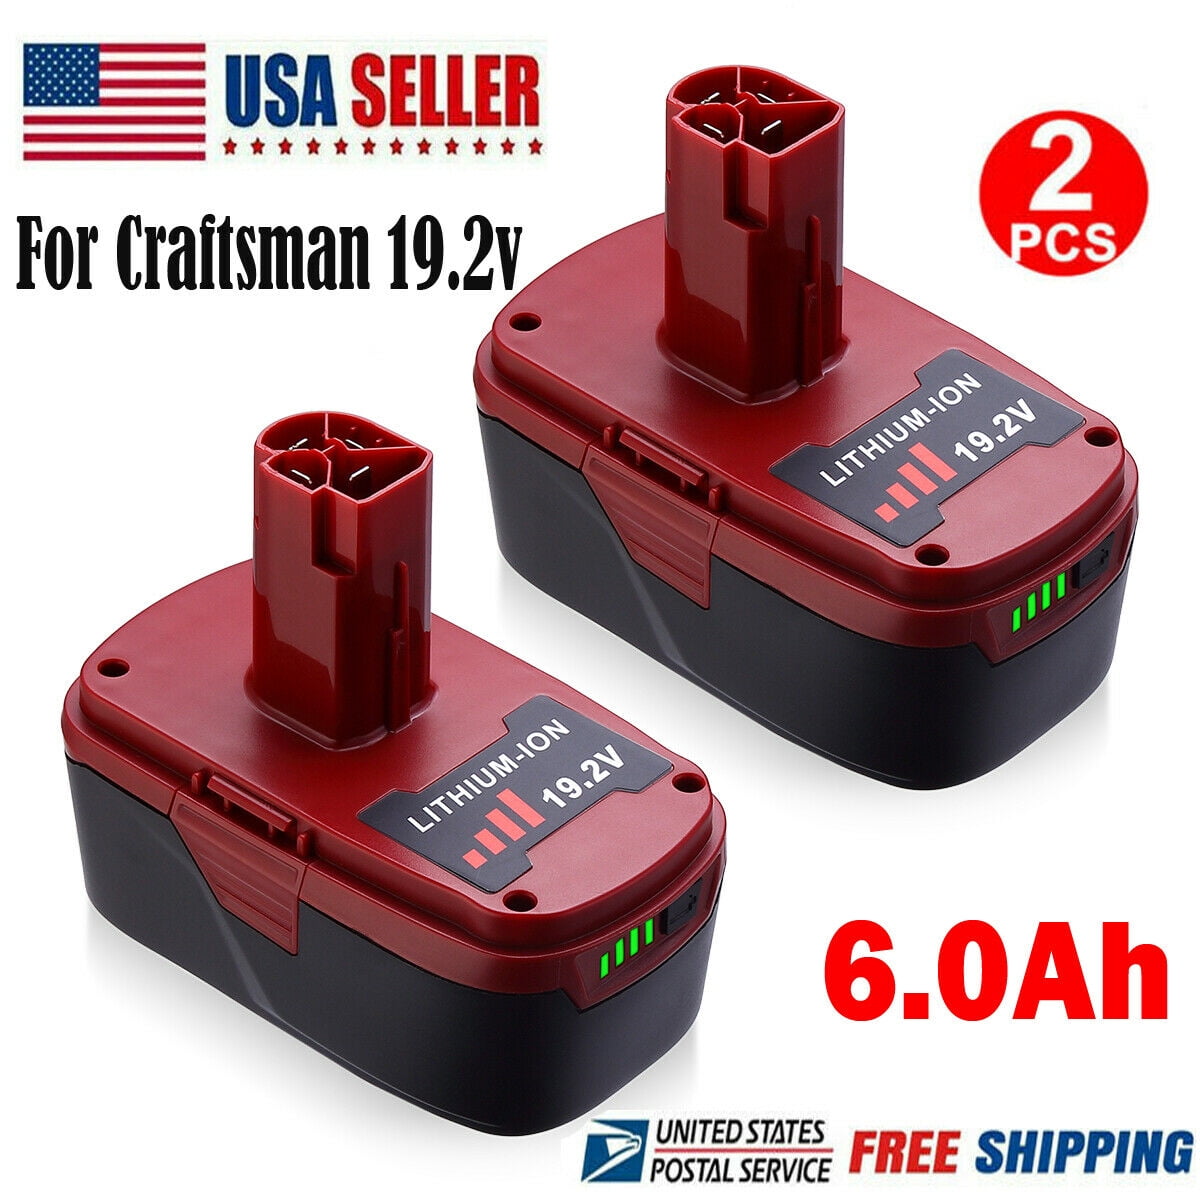 For Craftsman 19.2V Lithium-ion 6.0Ah C3 Diehard Battery 11375 130279005 PP2030